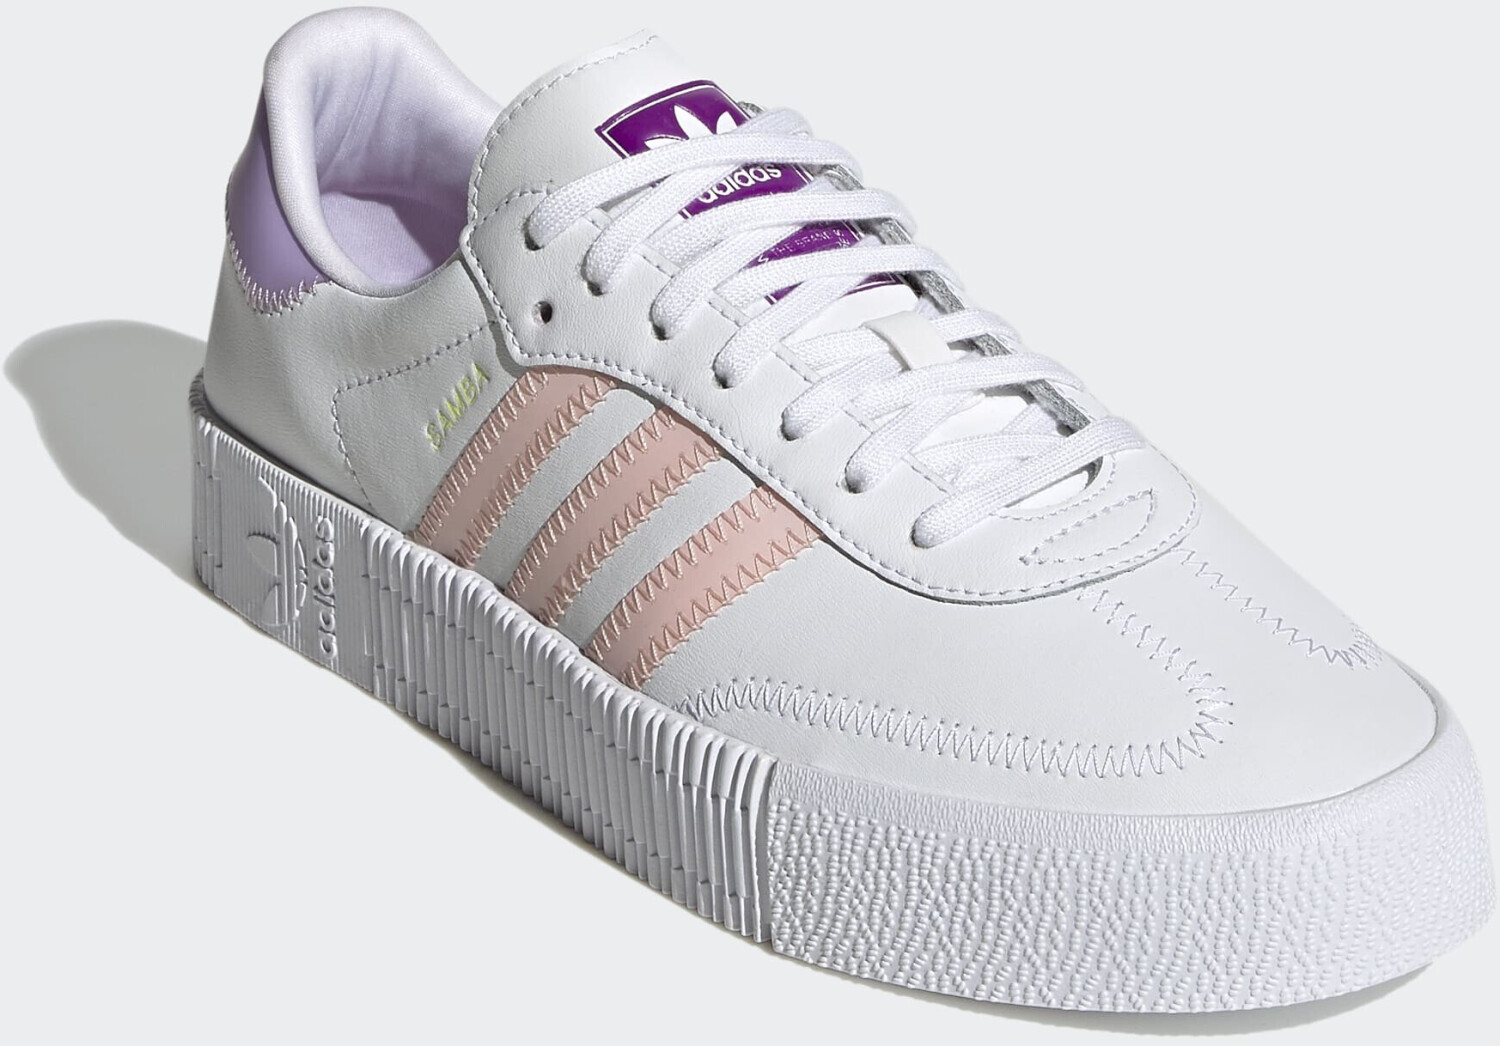 Buy Adidas Sambarose Women cloud white/haze coral/shock purple from Â£58.55 (Today) â Best Deals 